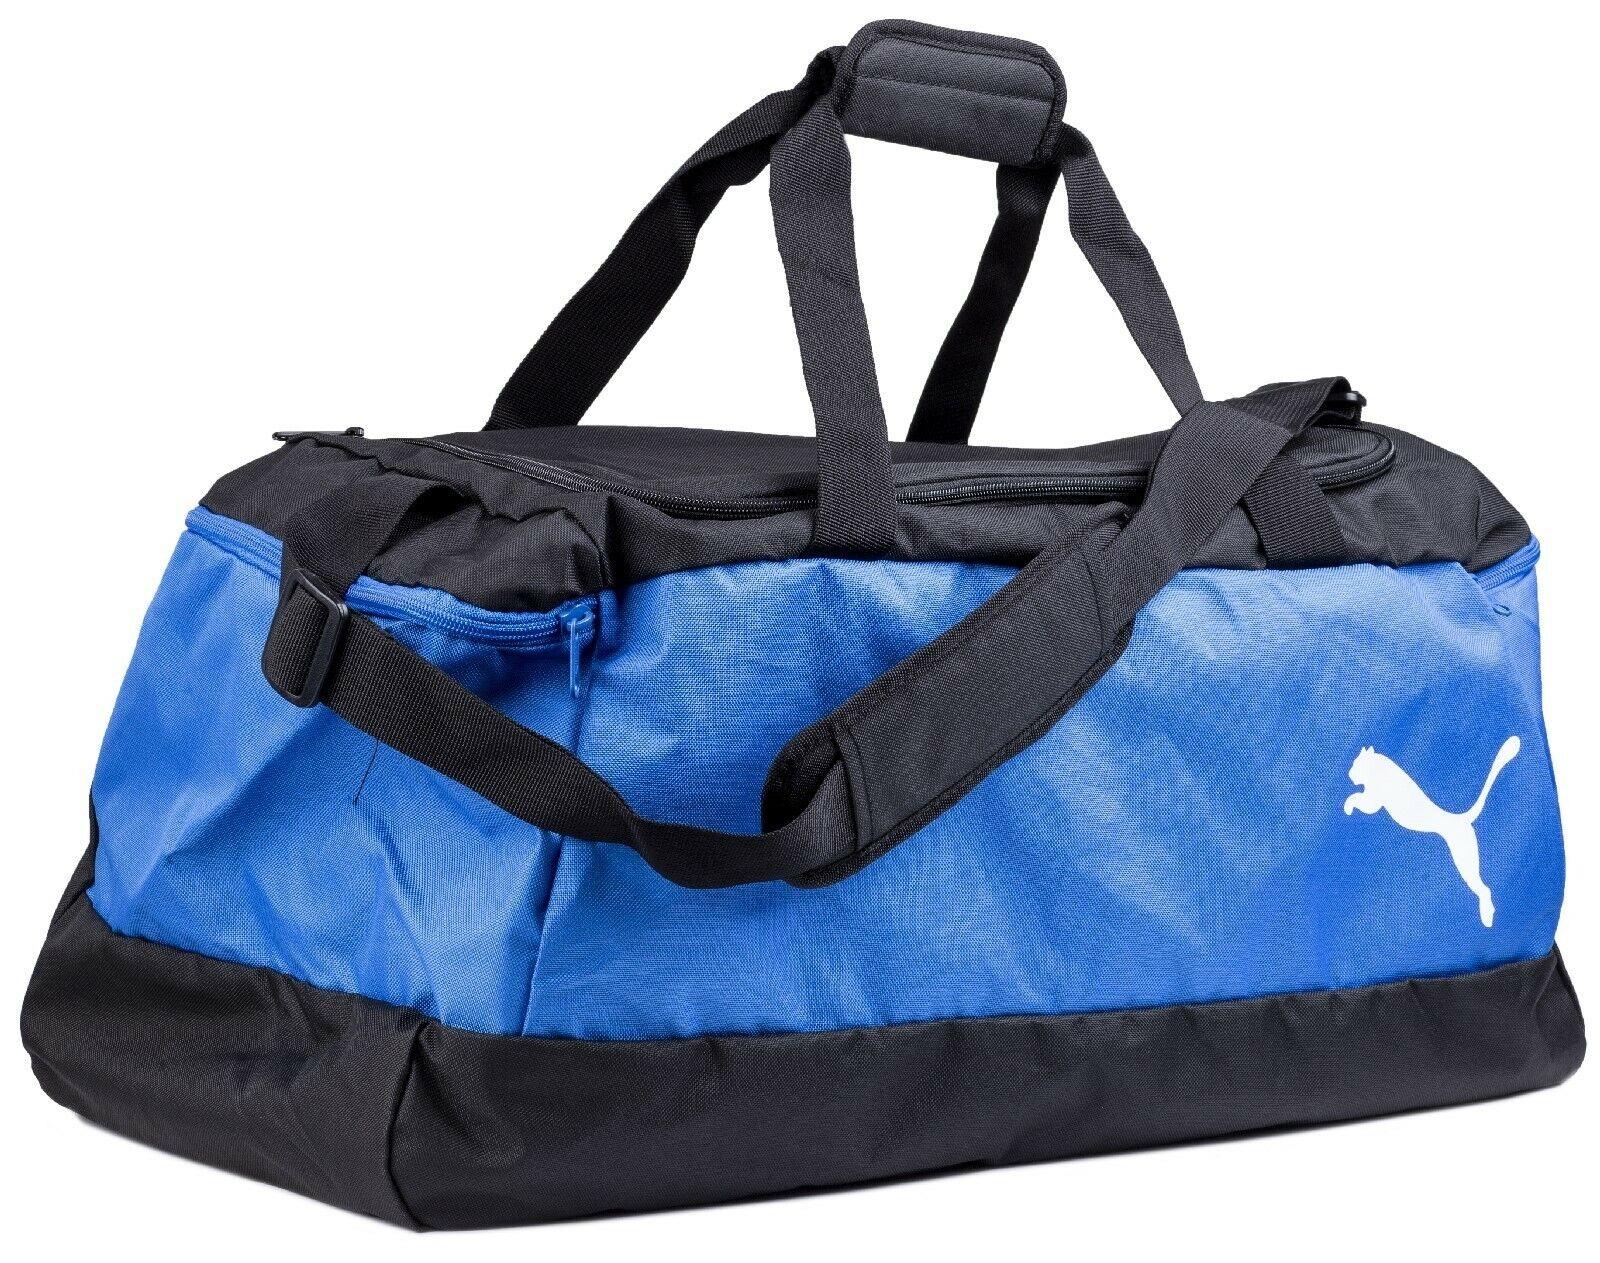 PUMA Pro Training Holdall royal blue/black durable luggage sports gym carry bag